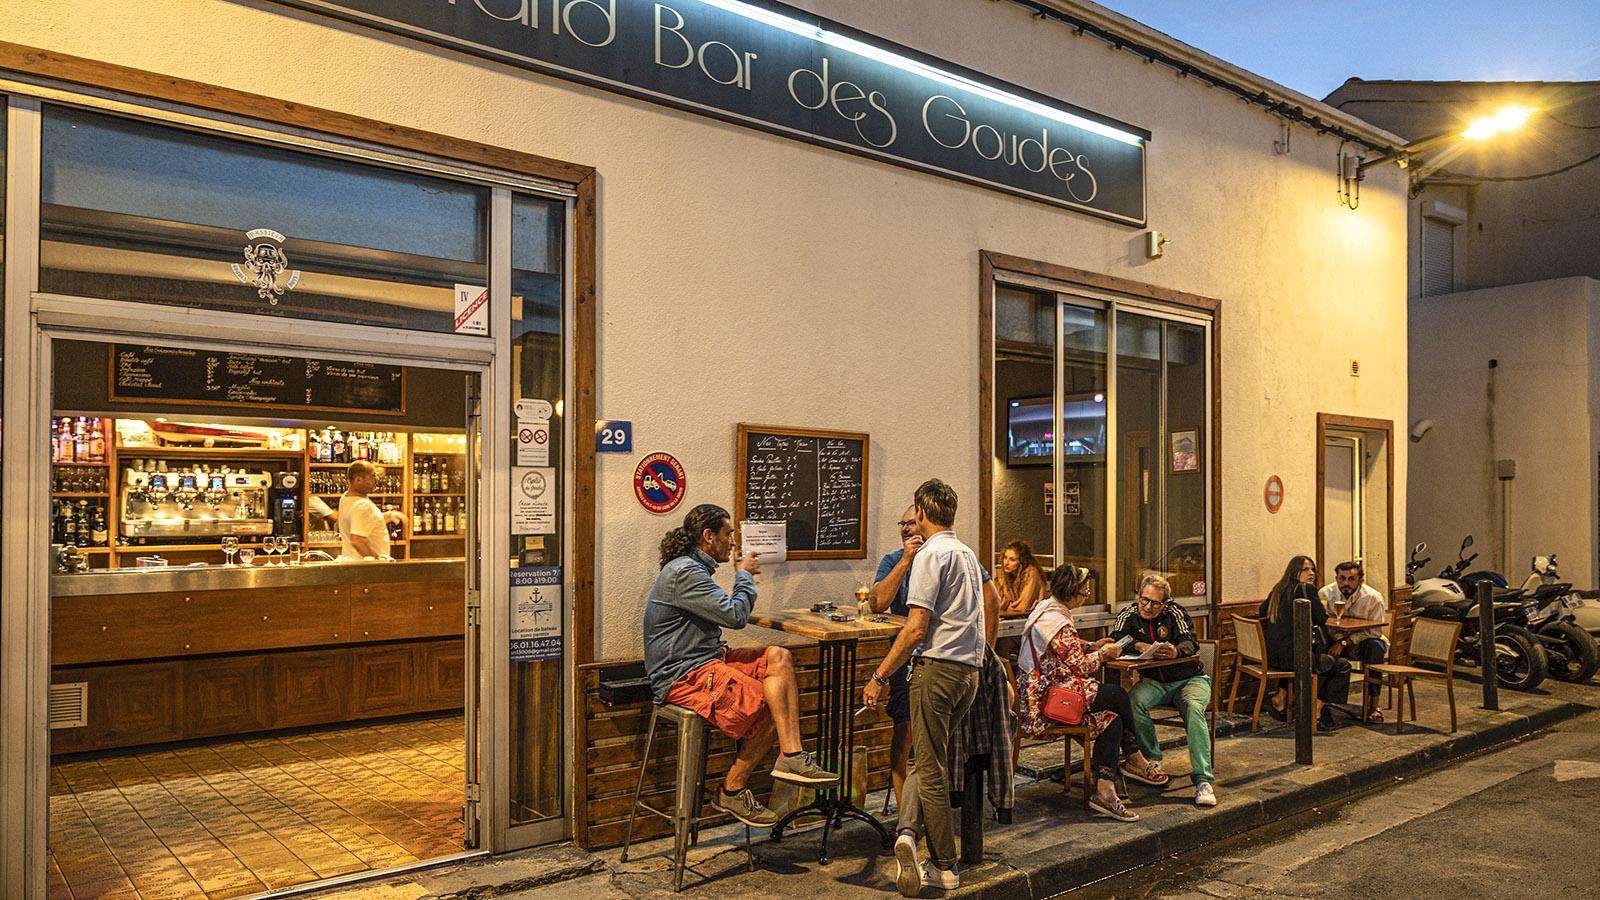 Die <em>Grand Bar des Goudes</em> in den Calanques von Marseille. Foto: Hilke Maunder